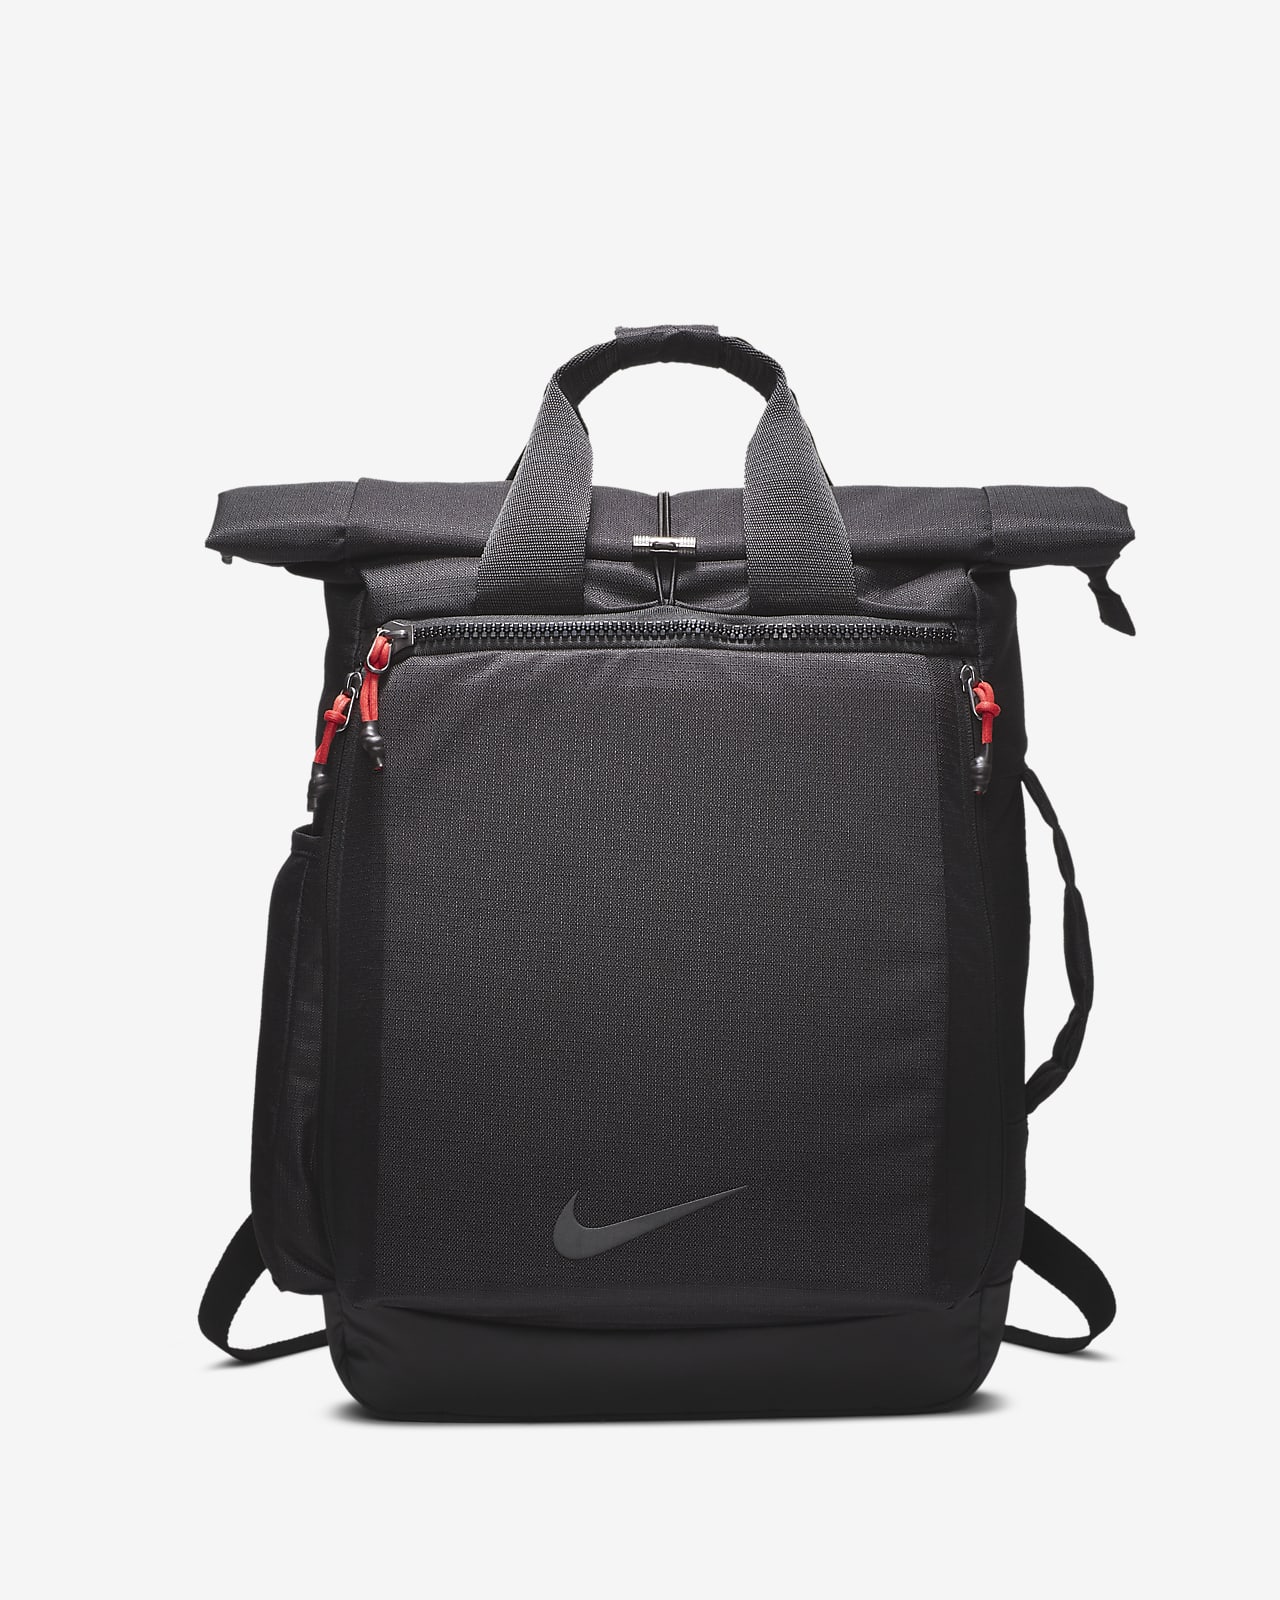 nike rolling laptop backpack